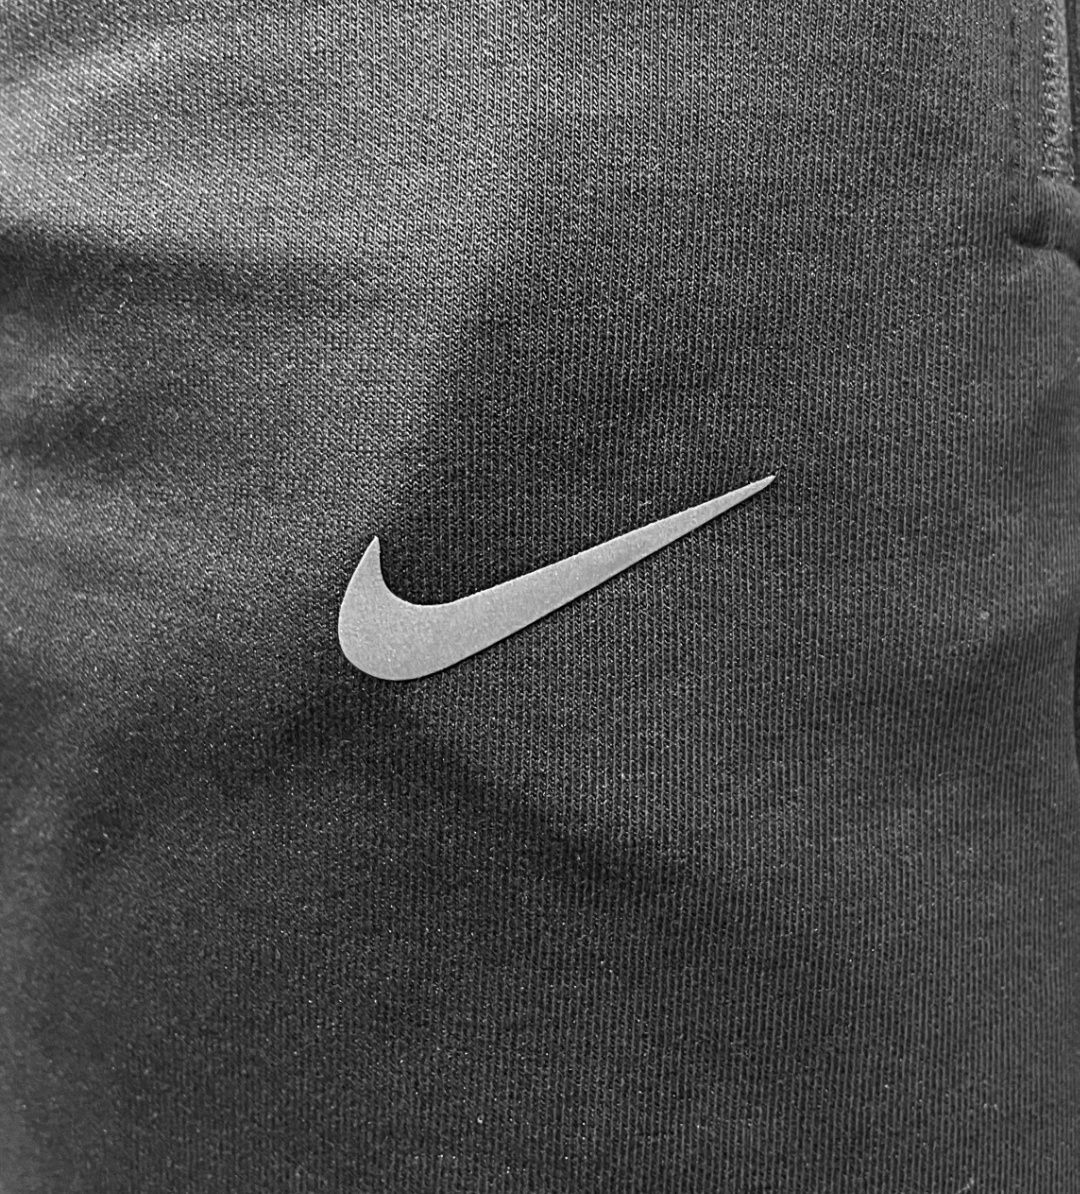 Мужской спортивный костюм Nike весна осень